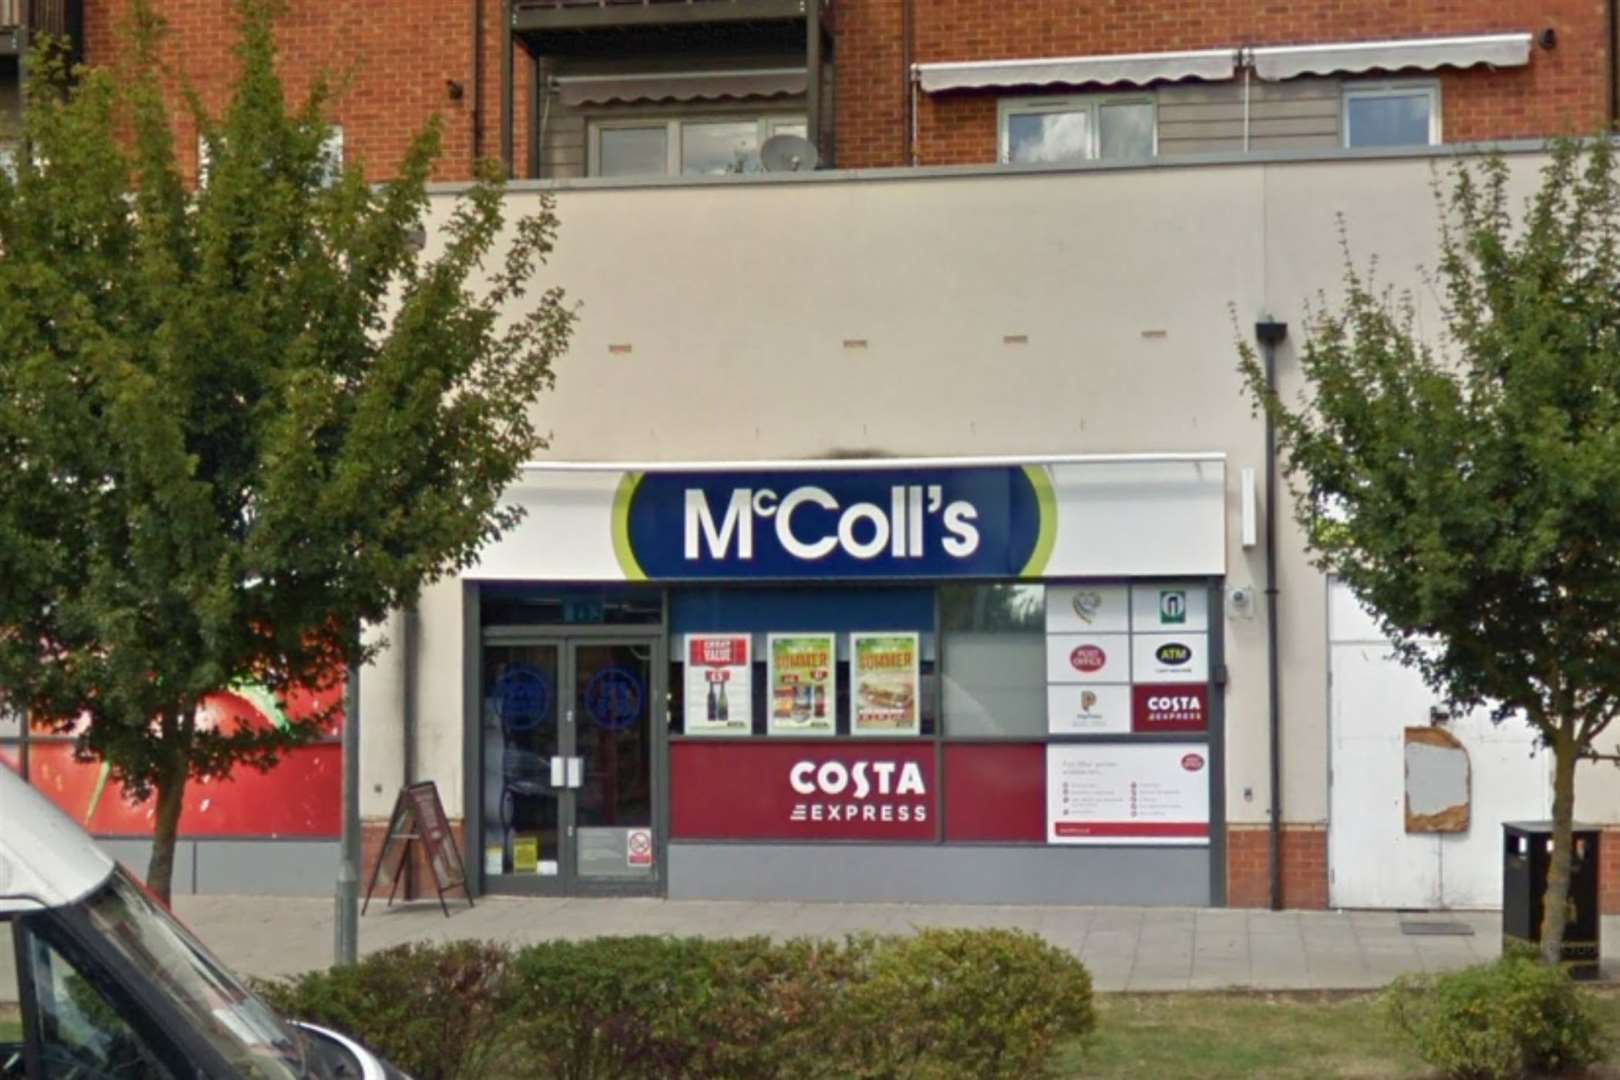 McColl's has 20 stores across Kent. Photo: Google Street View